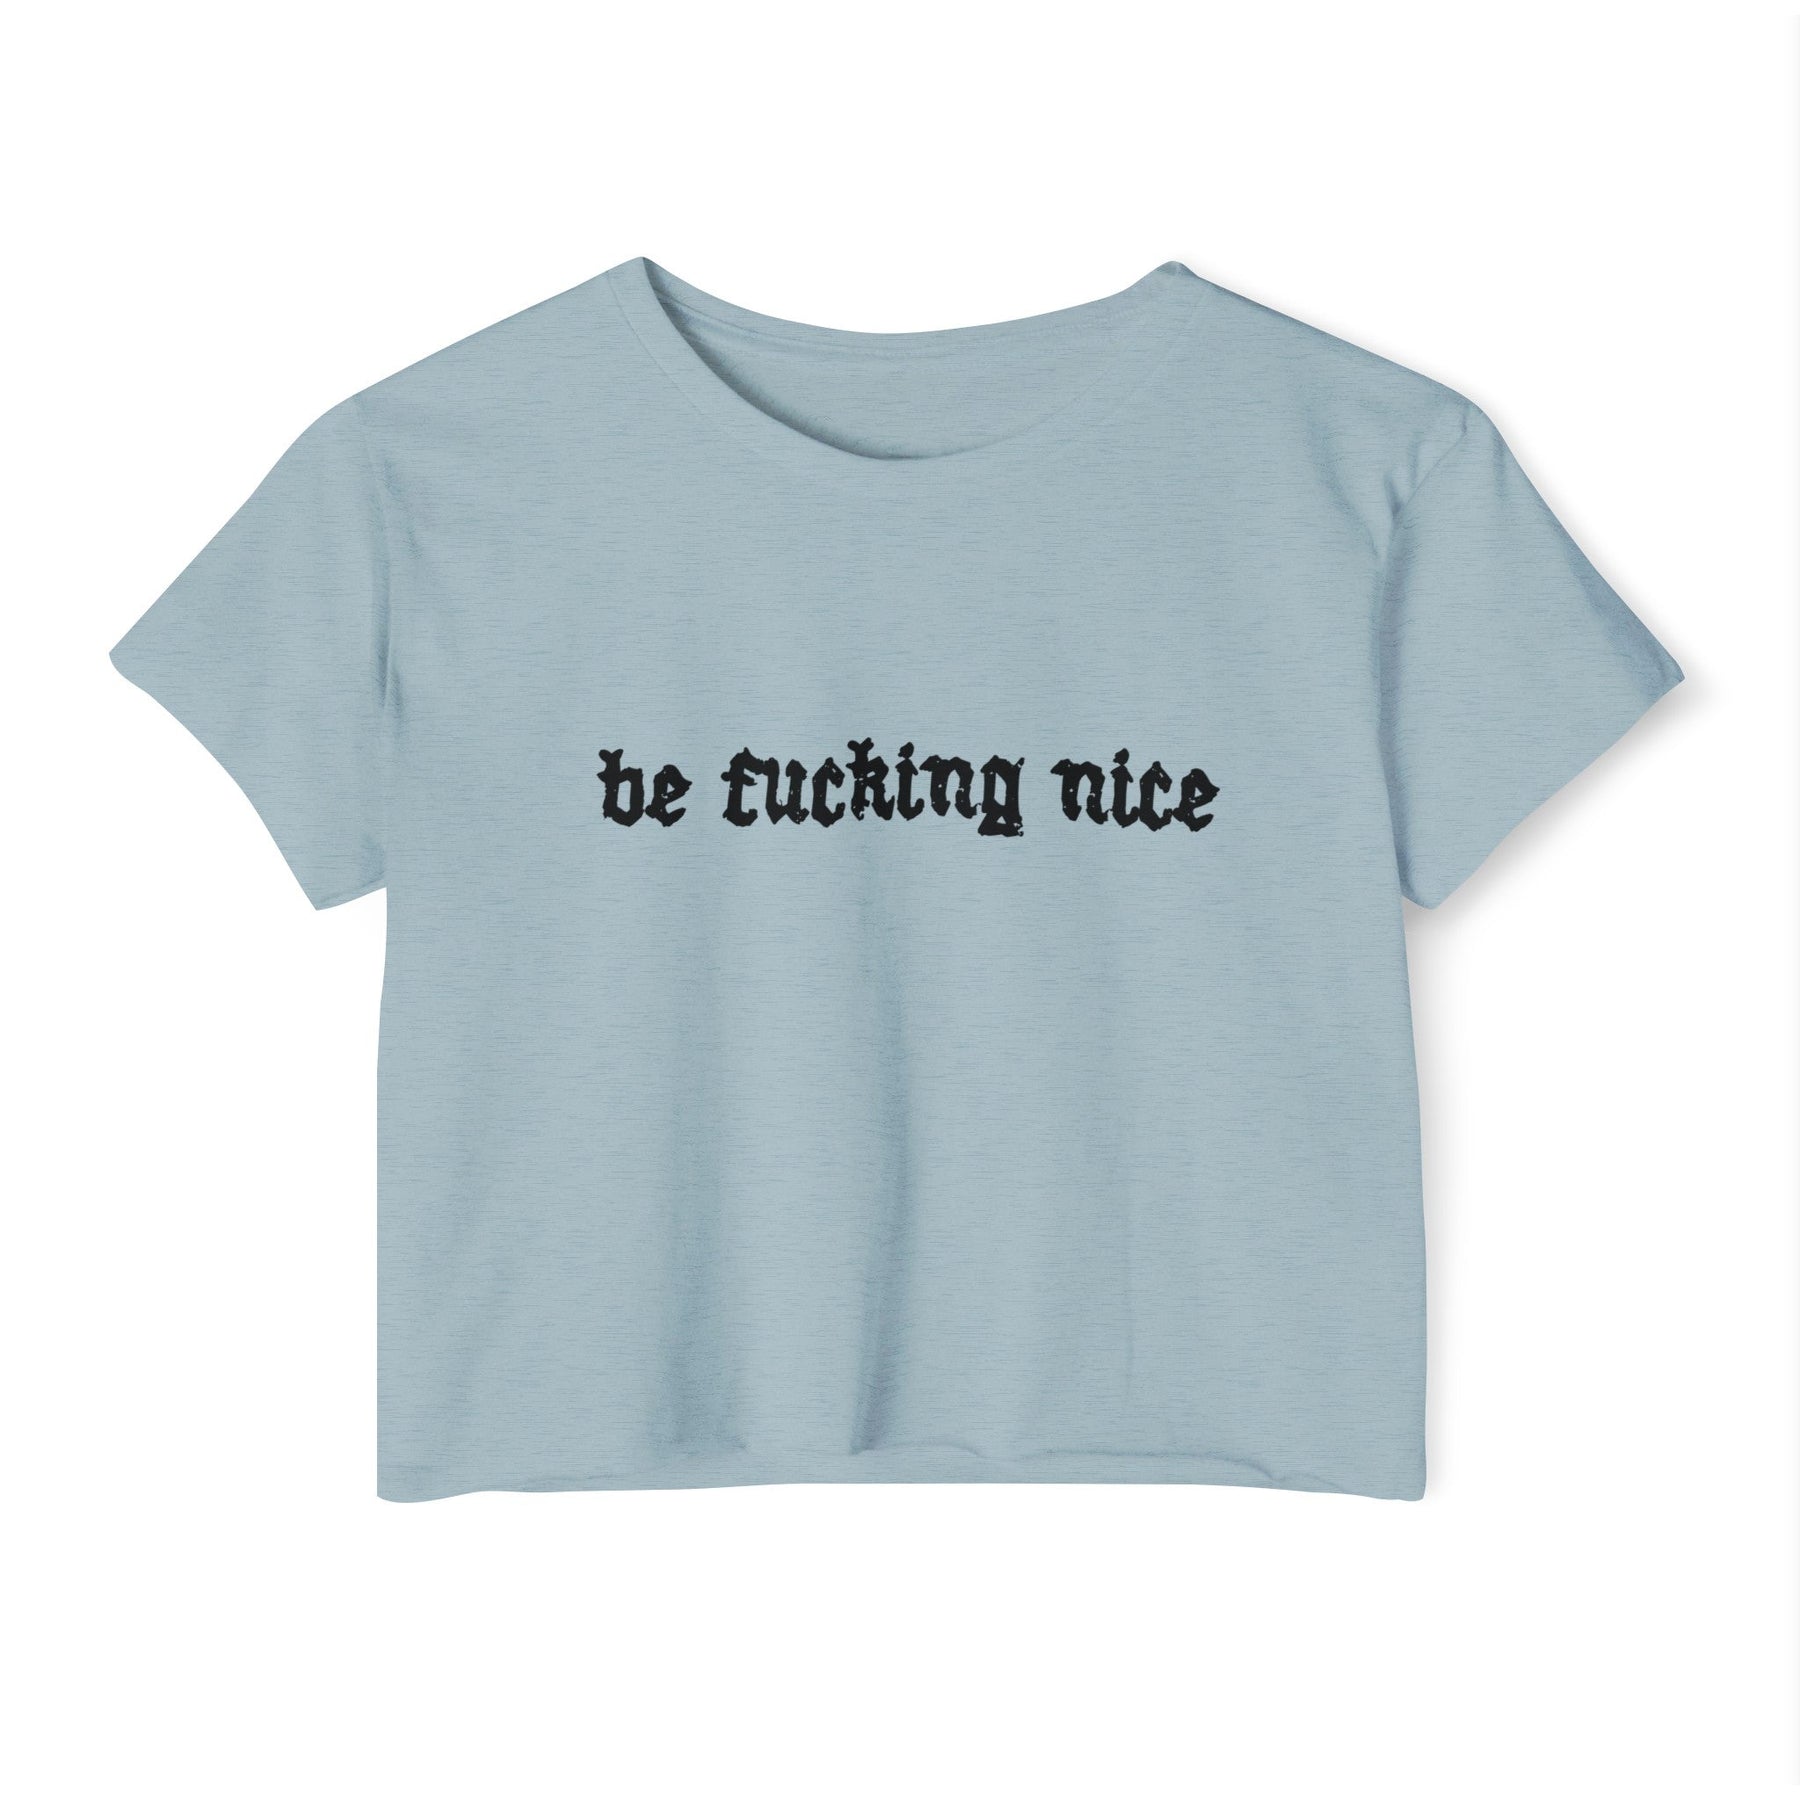 Be Fucking Nice Women's Lightweight Crop Top - Goth Cloth Co.T - Shirt18313080364451034687